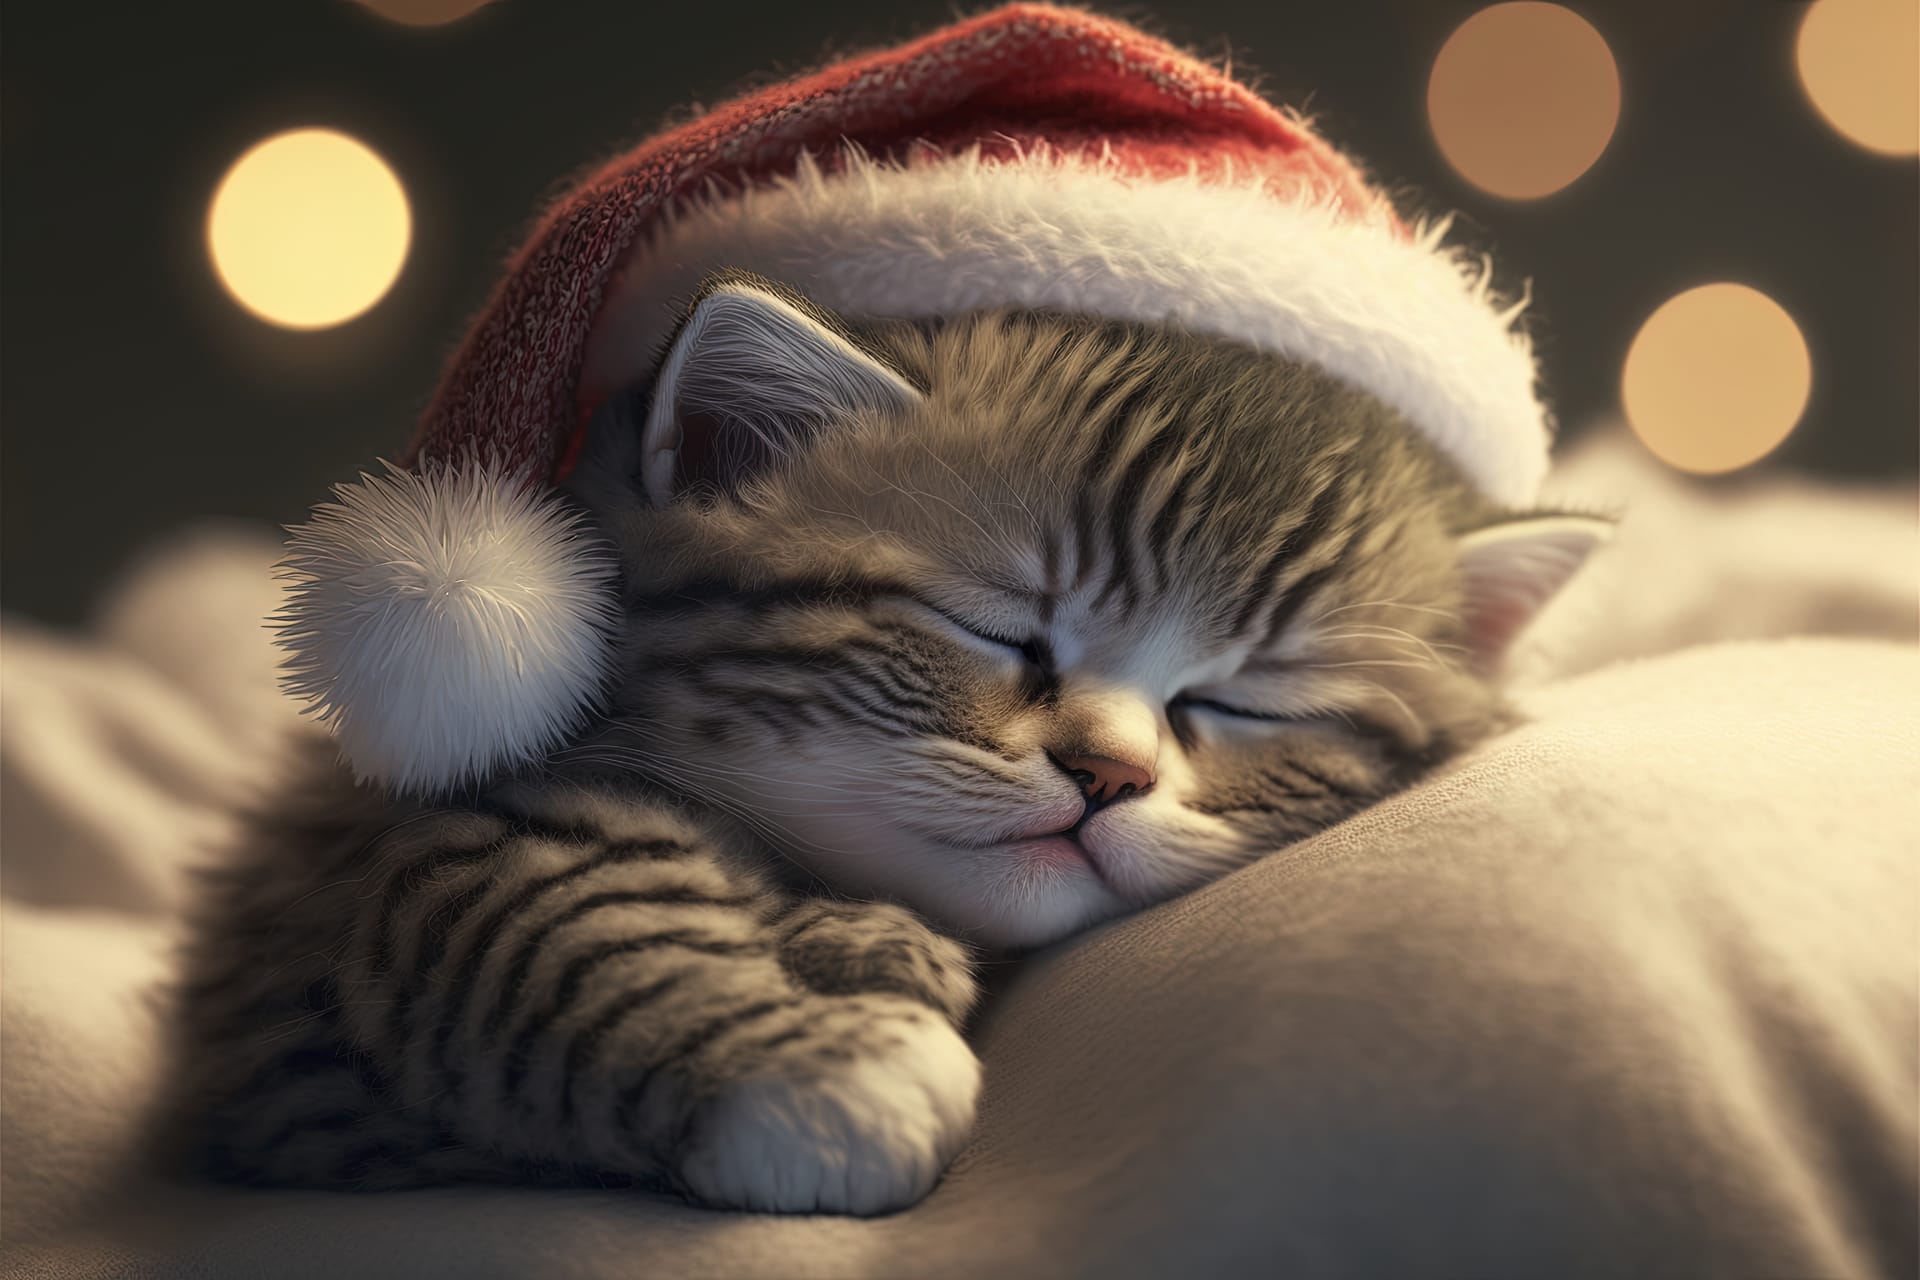 Kitten wearing santa s hat sleeps fluffy pillow excellent picture